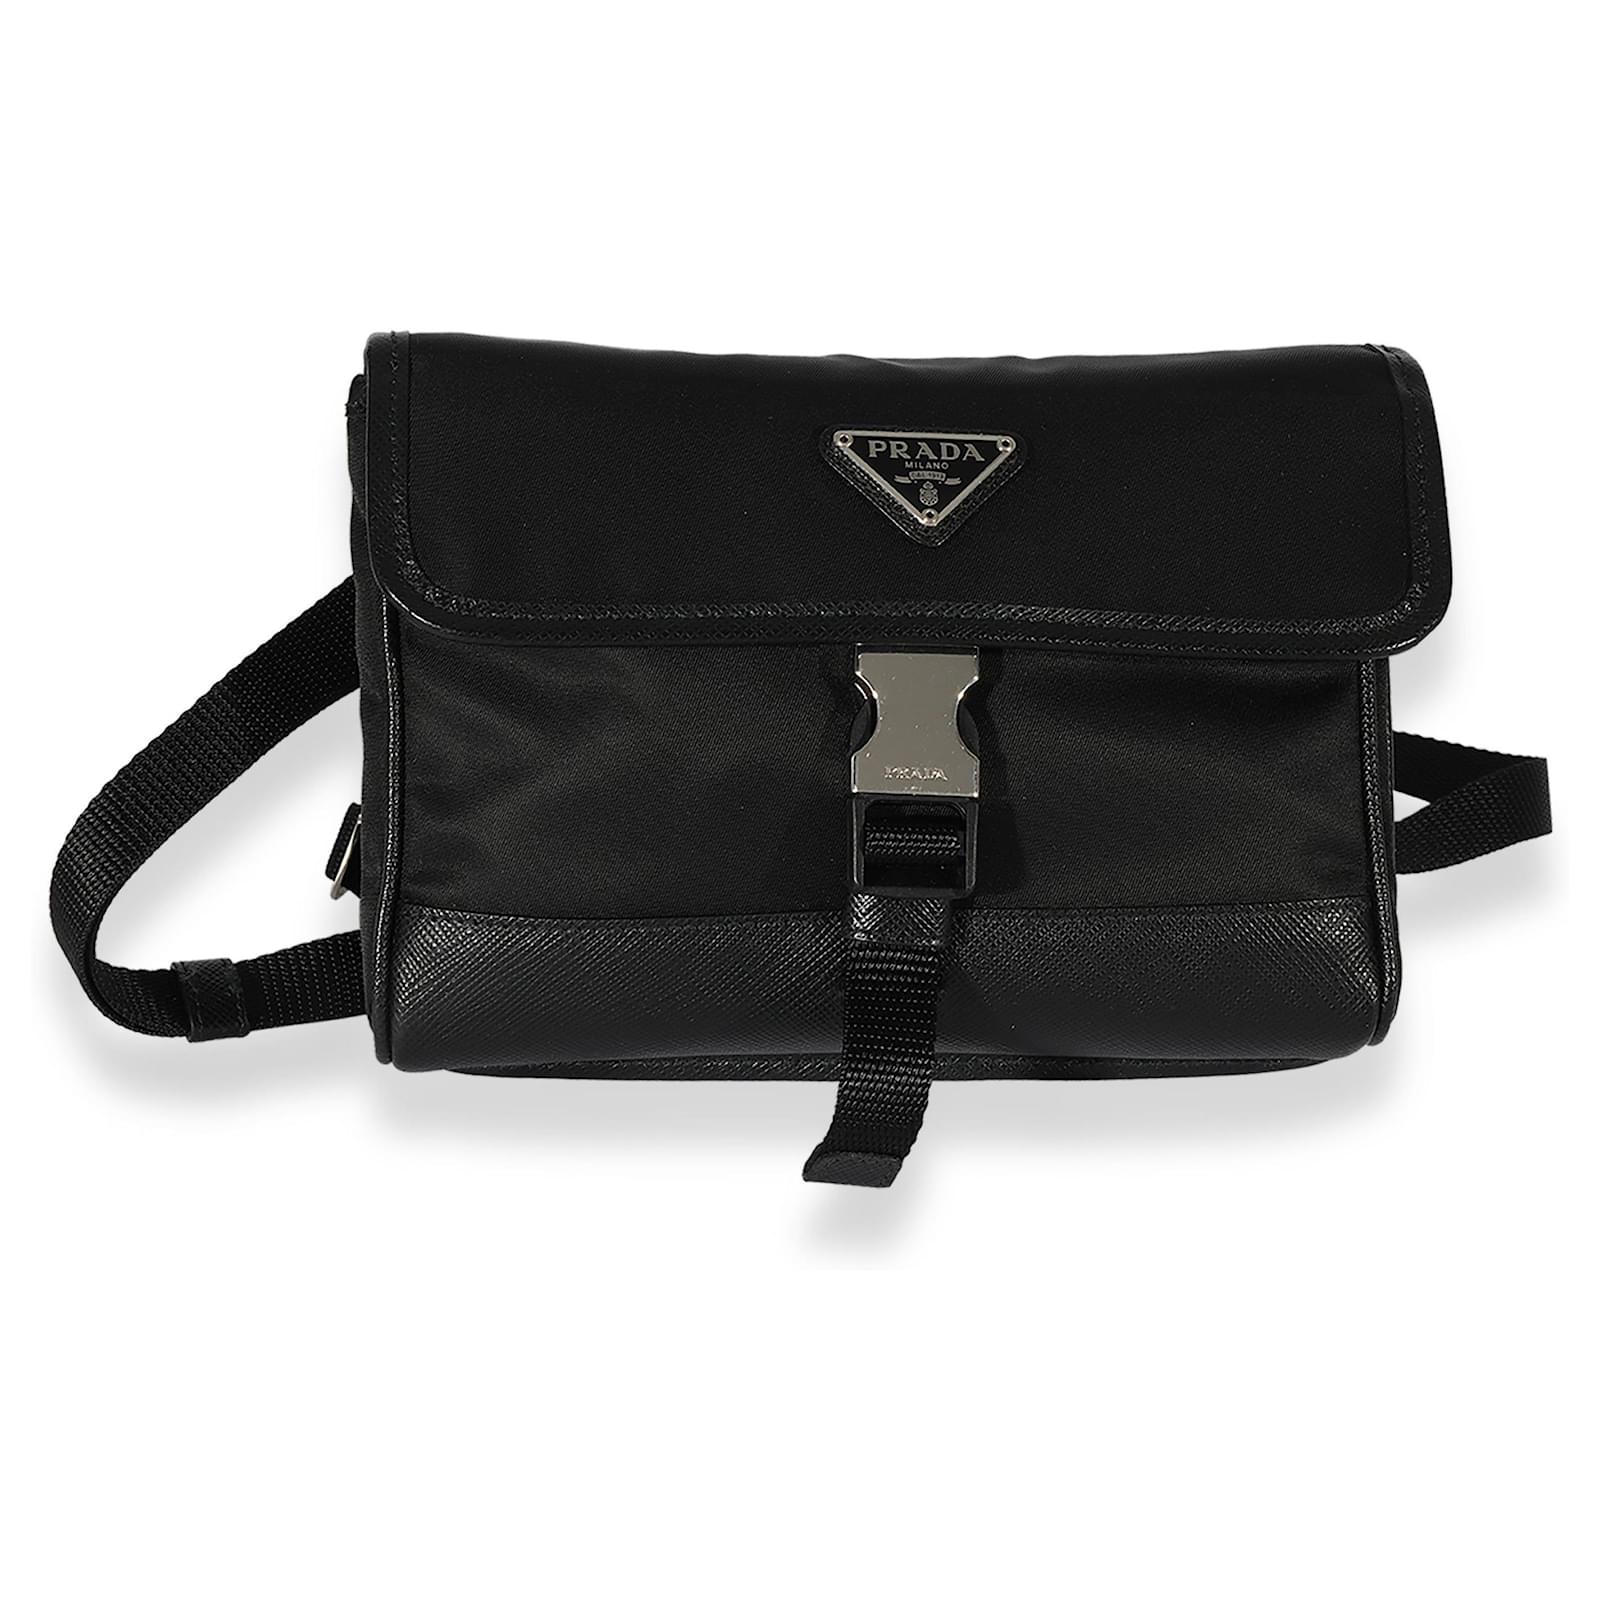 Black Re-nylon And Saffiano Shoulder Bag